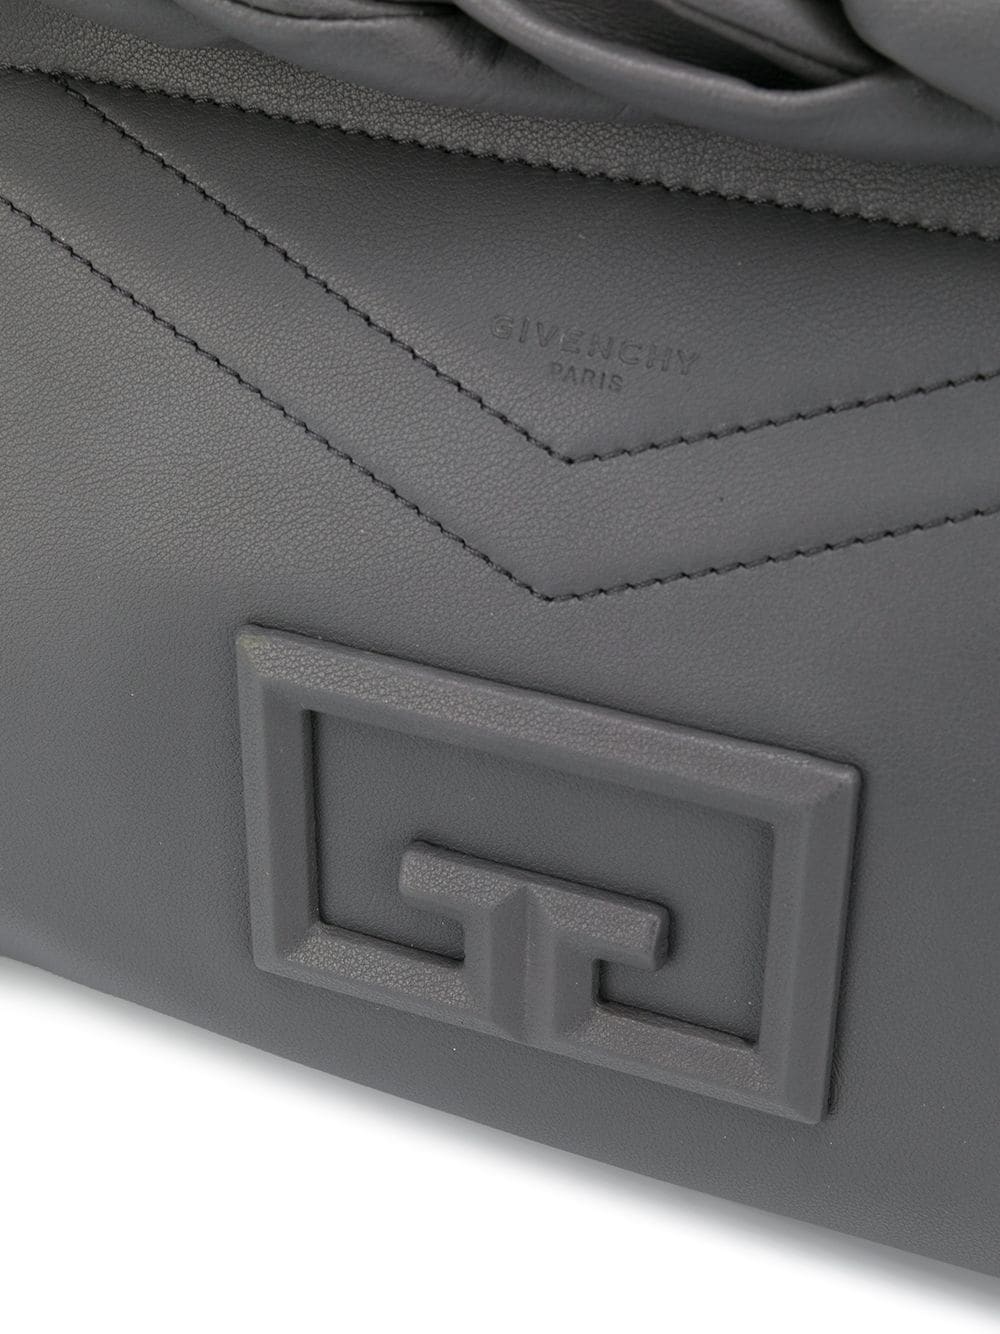 фото Givenchy сумка на плечо id93 среднего размера